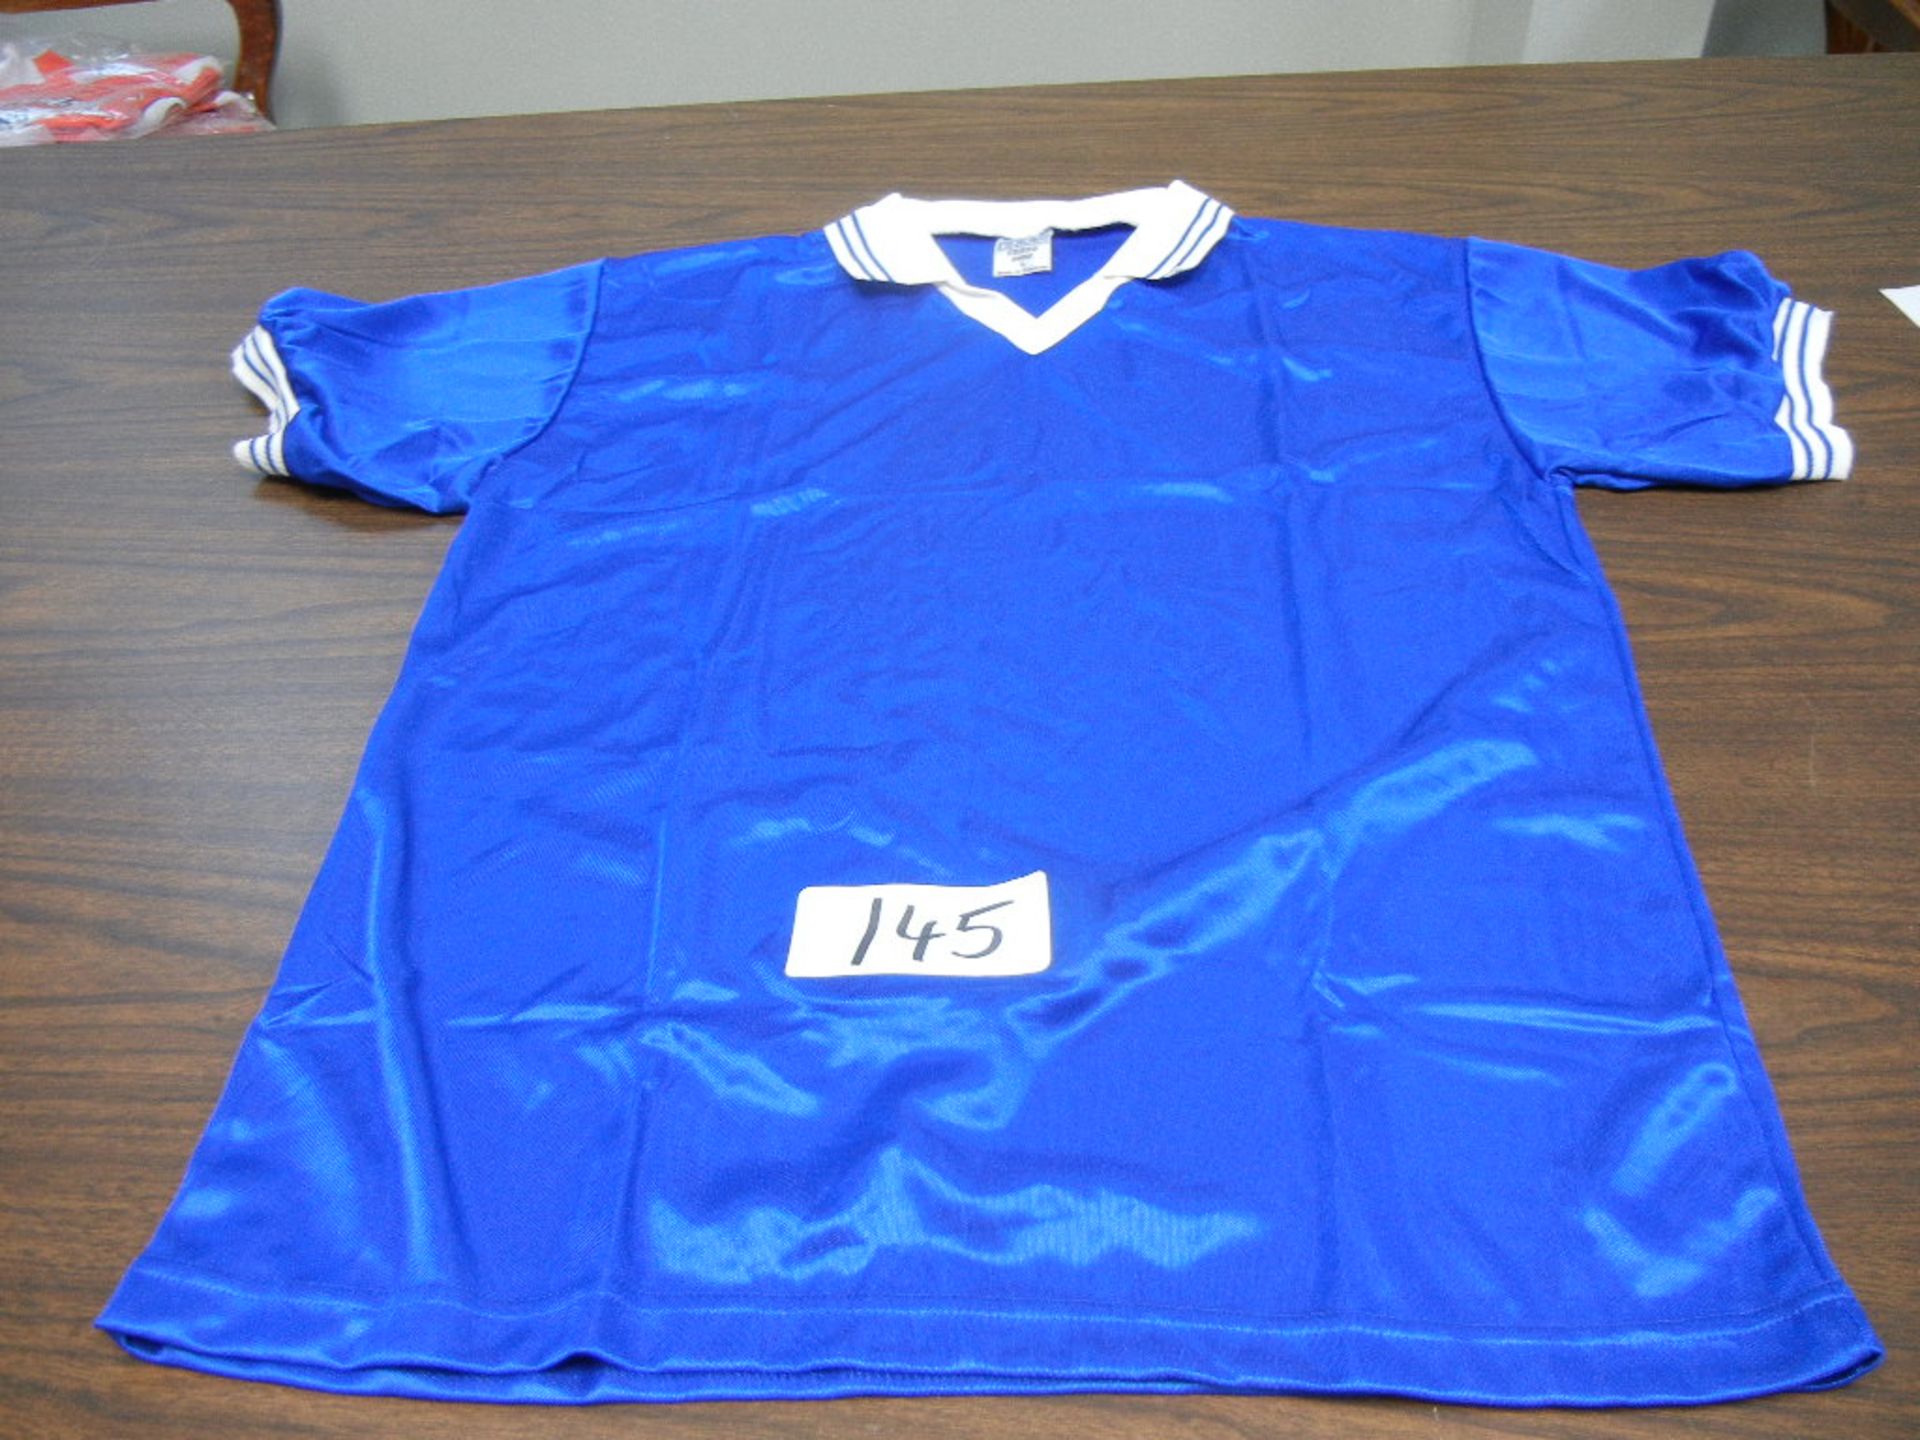 Case of Adult Soccer Jersey Hi-Sheen V-Neck, 1/4 Sleeves, Knit Collar VKM# A696